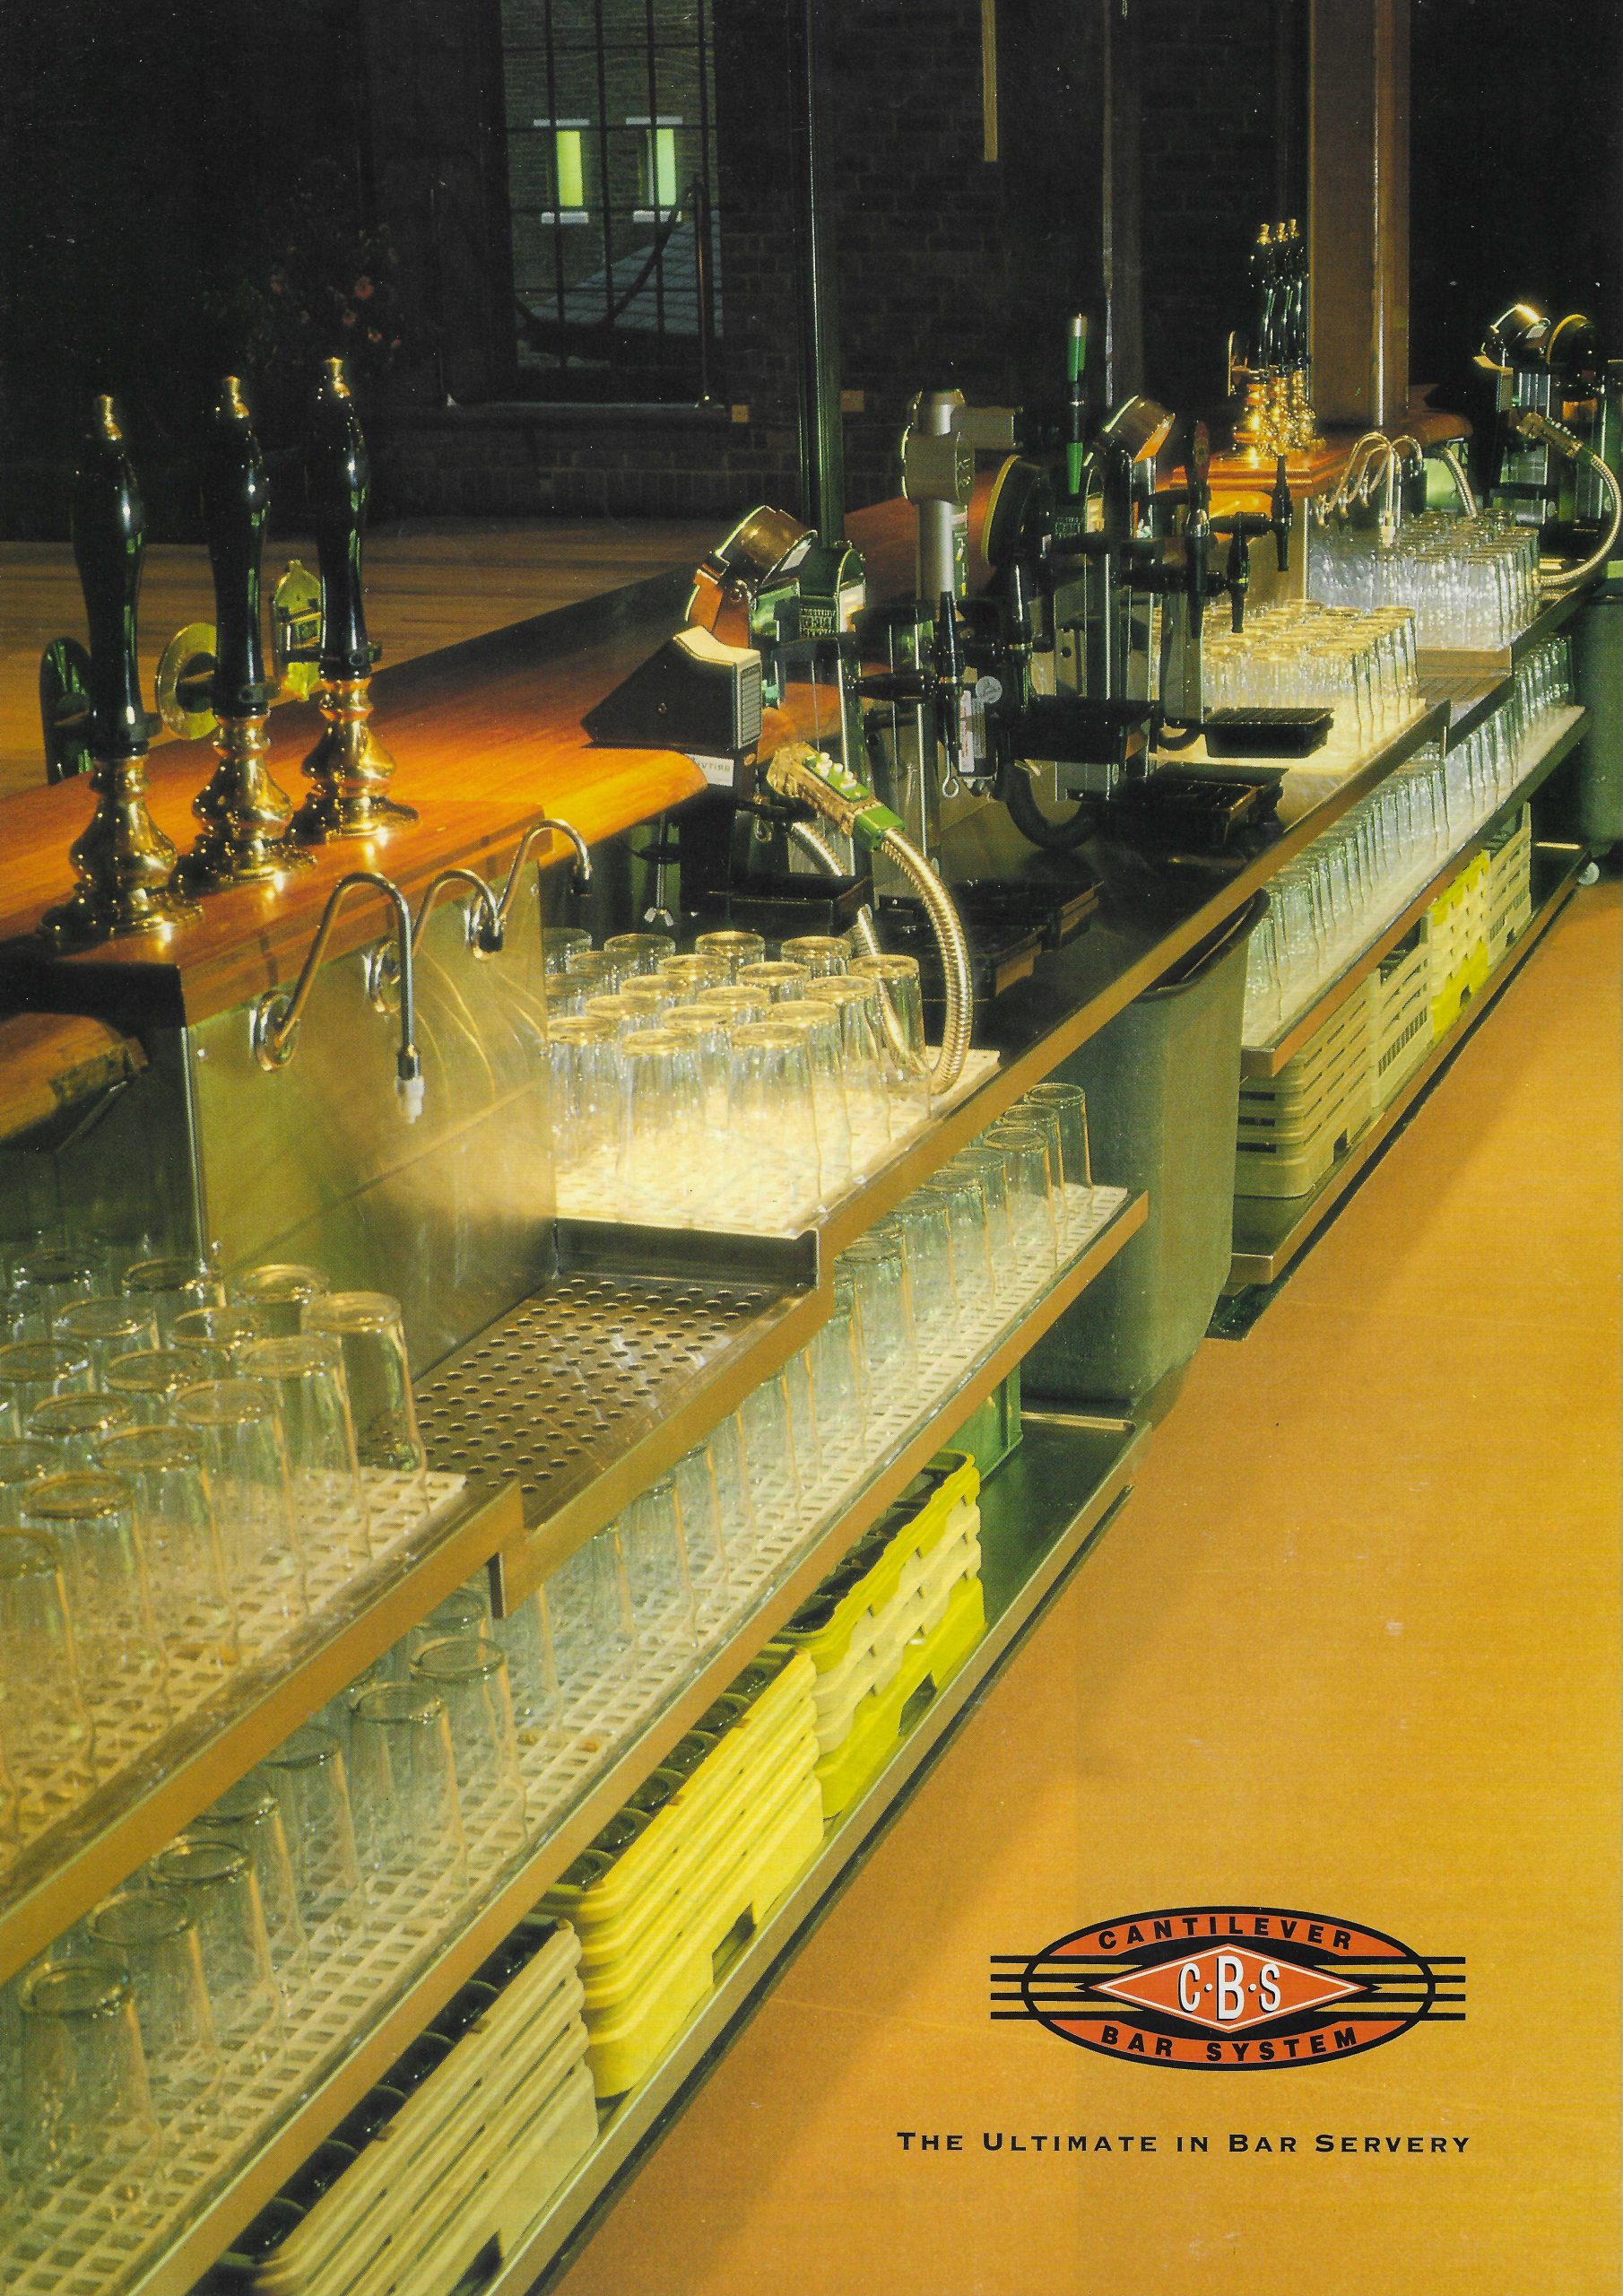 Transdisciplinary Design - Bar service